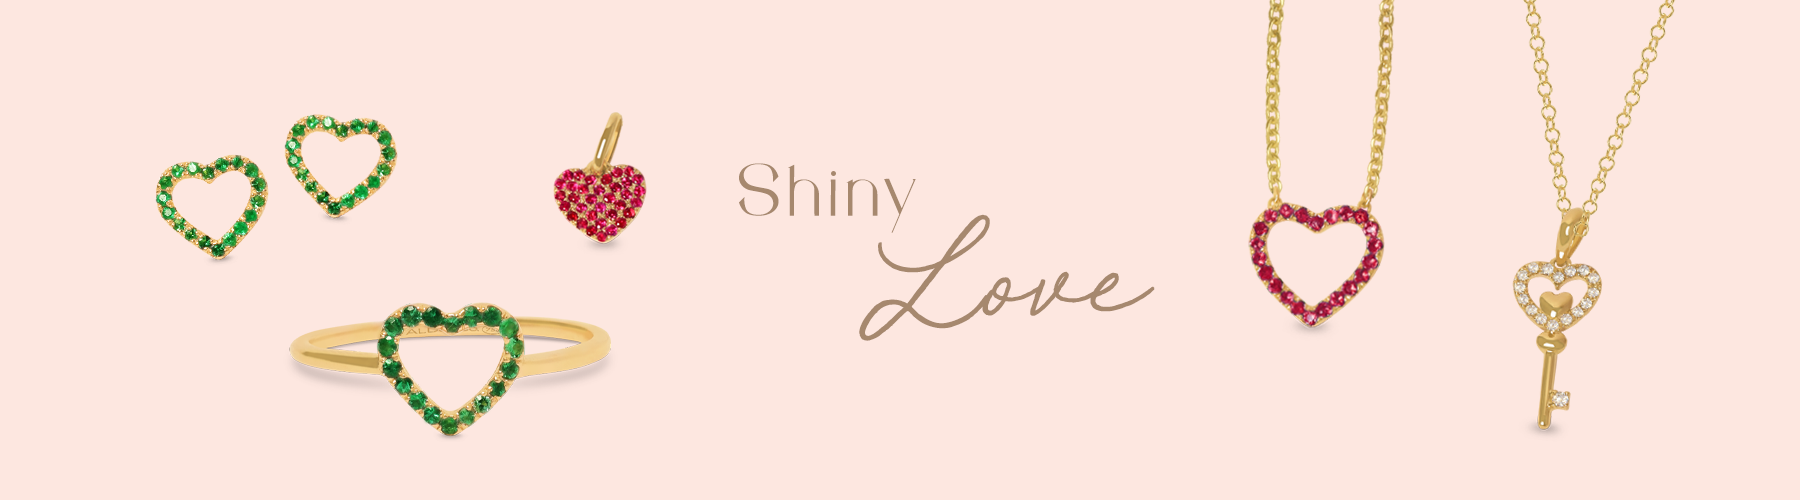 Colección Shiny love